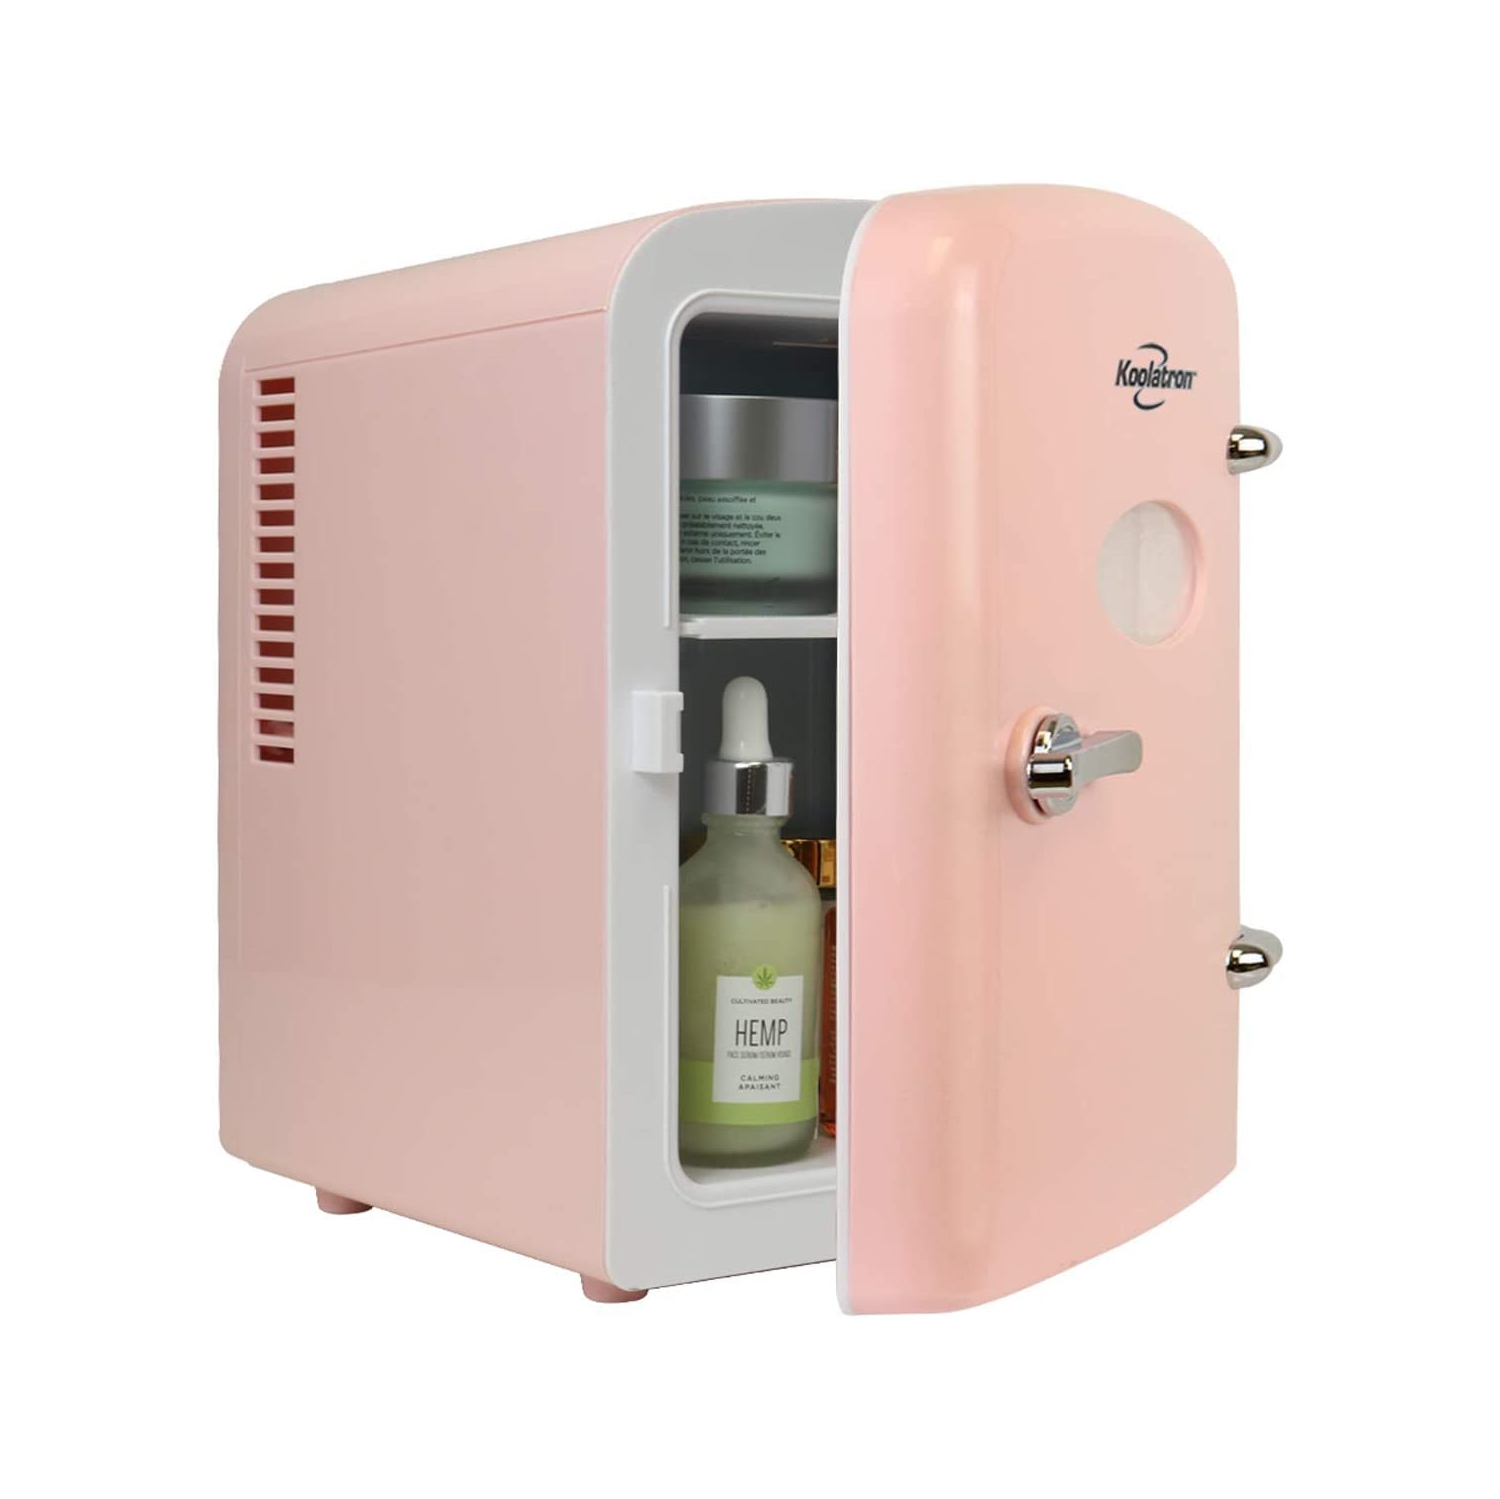 Retro Mini Portable Fridge, 4L Compact Refrigerator for Skincare, Beauty Serum, Face Mask, Personal Cooler, Cute Desktop Accessory for Home Office Dorm Travel, Pink